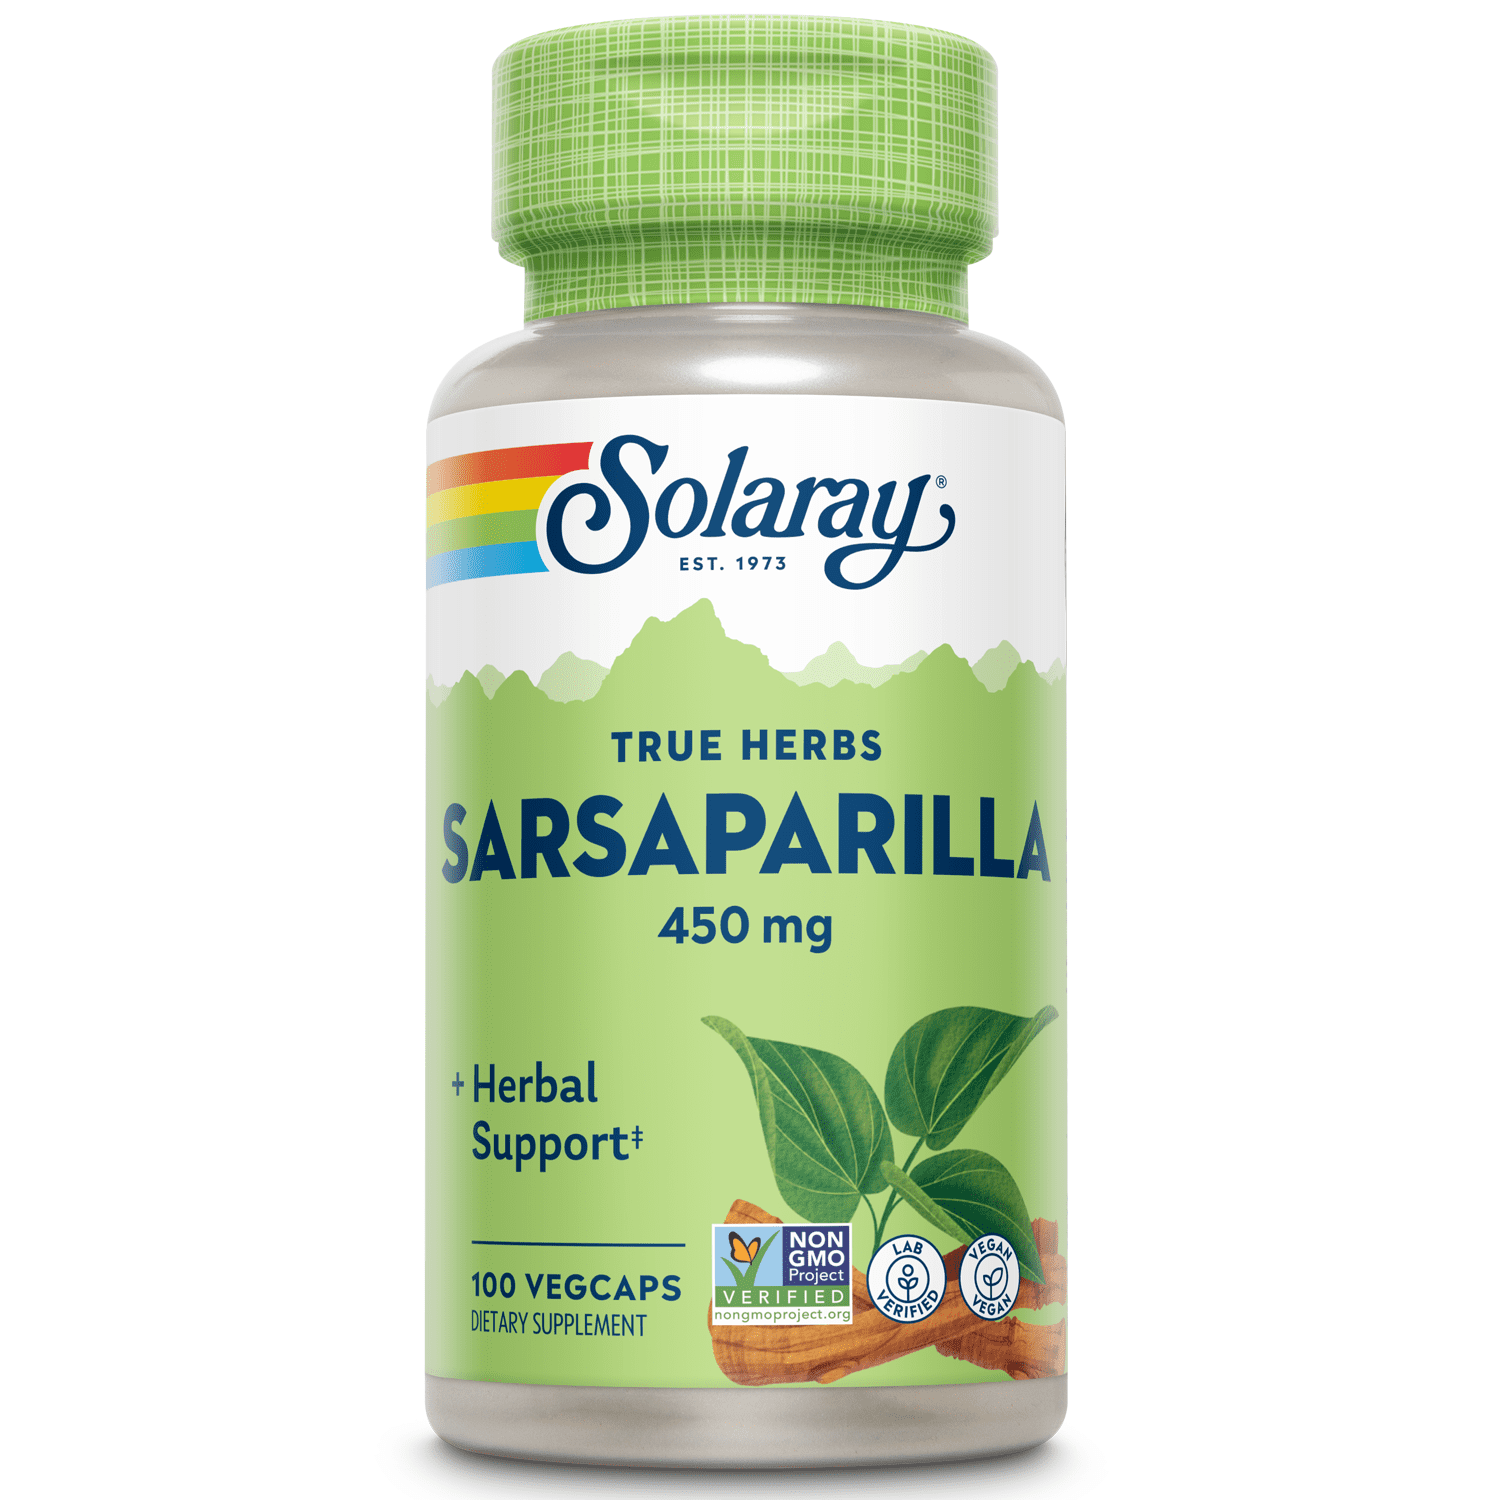 Sarsaparilla Root - Healthier Steps